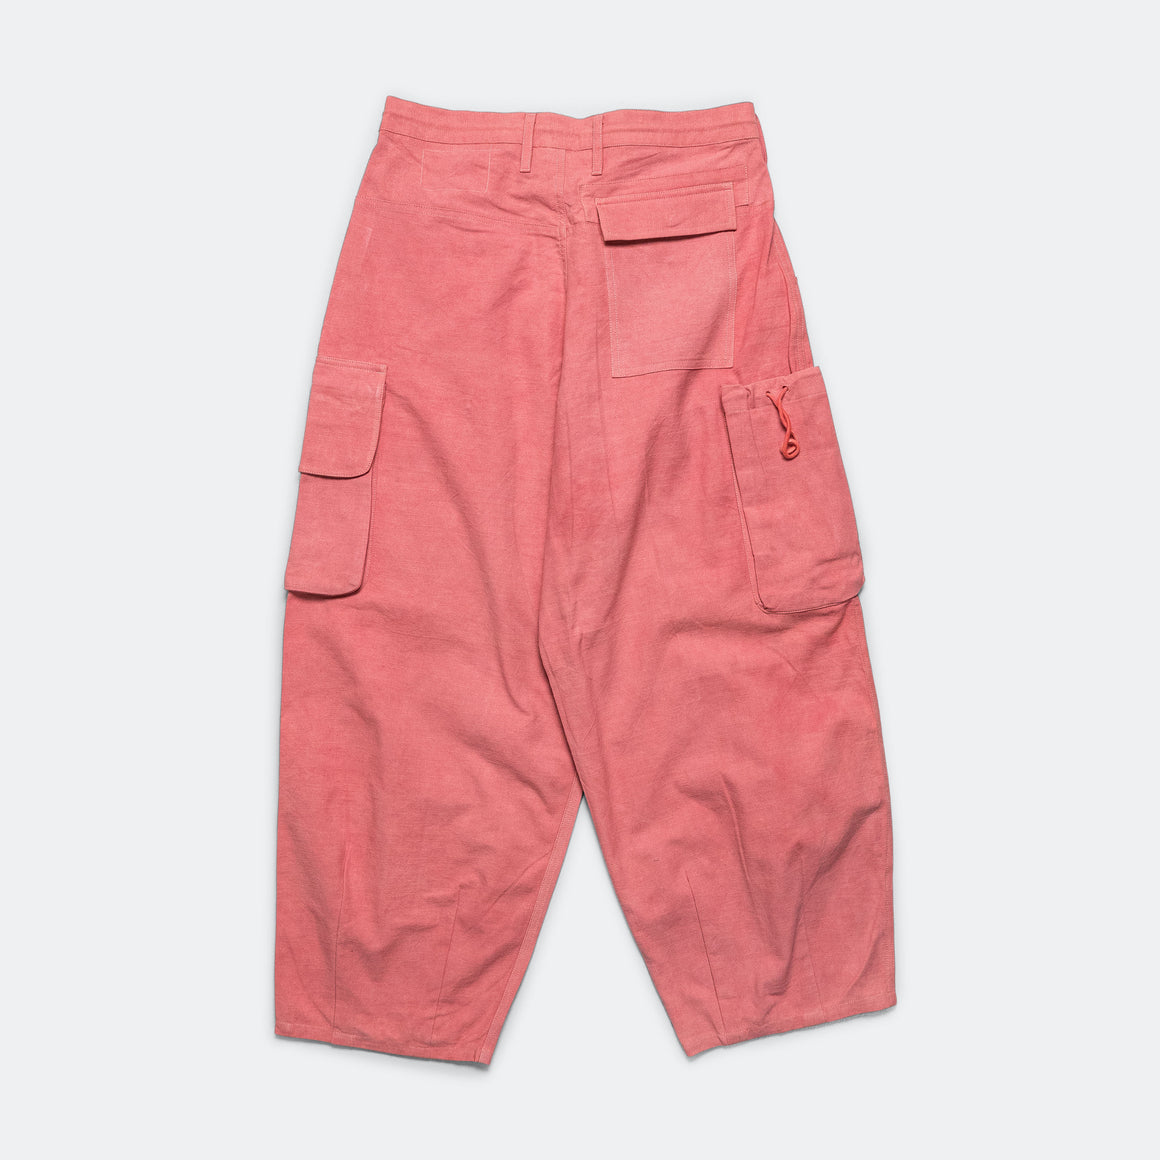 Forager Pants - Ancient Pink Slub